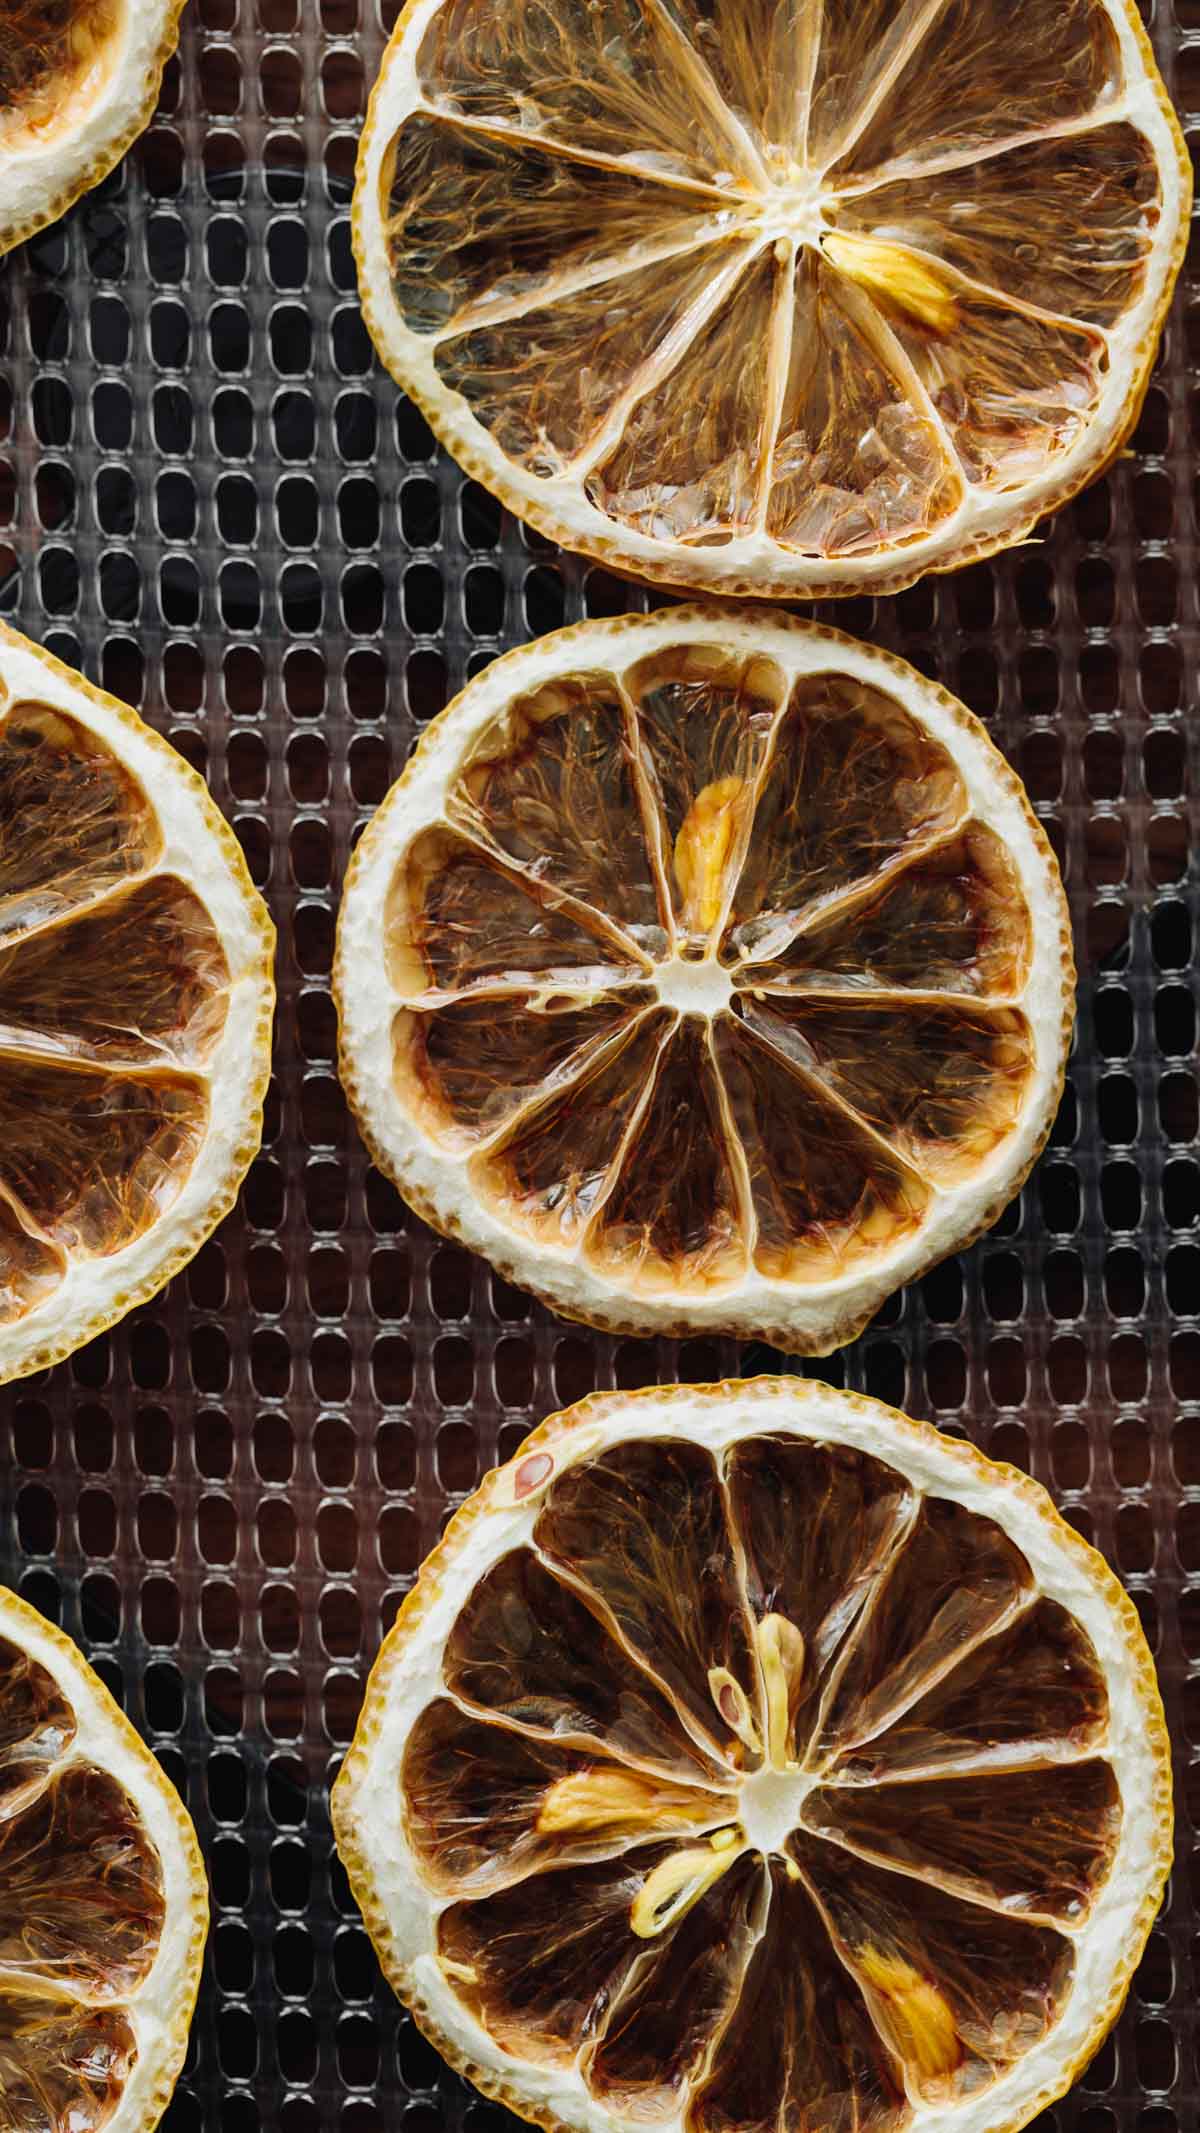 Saving the season: Lemons  Freezing, Drying, and Preserving